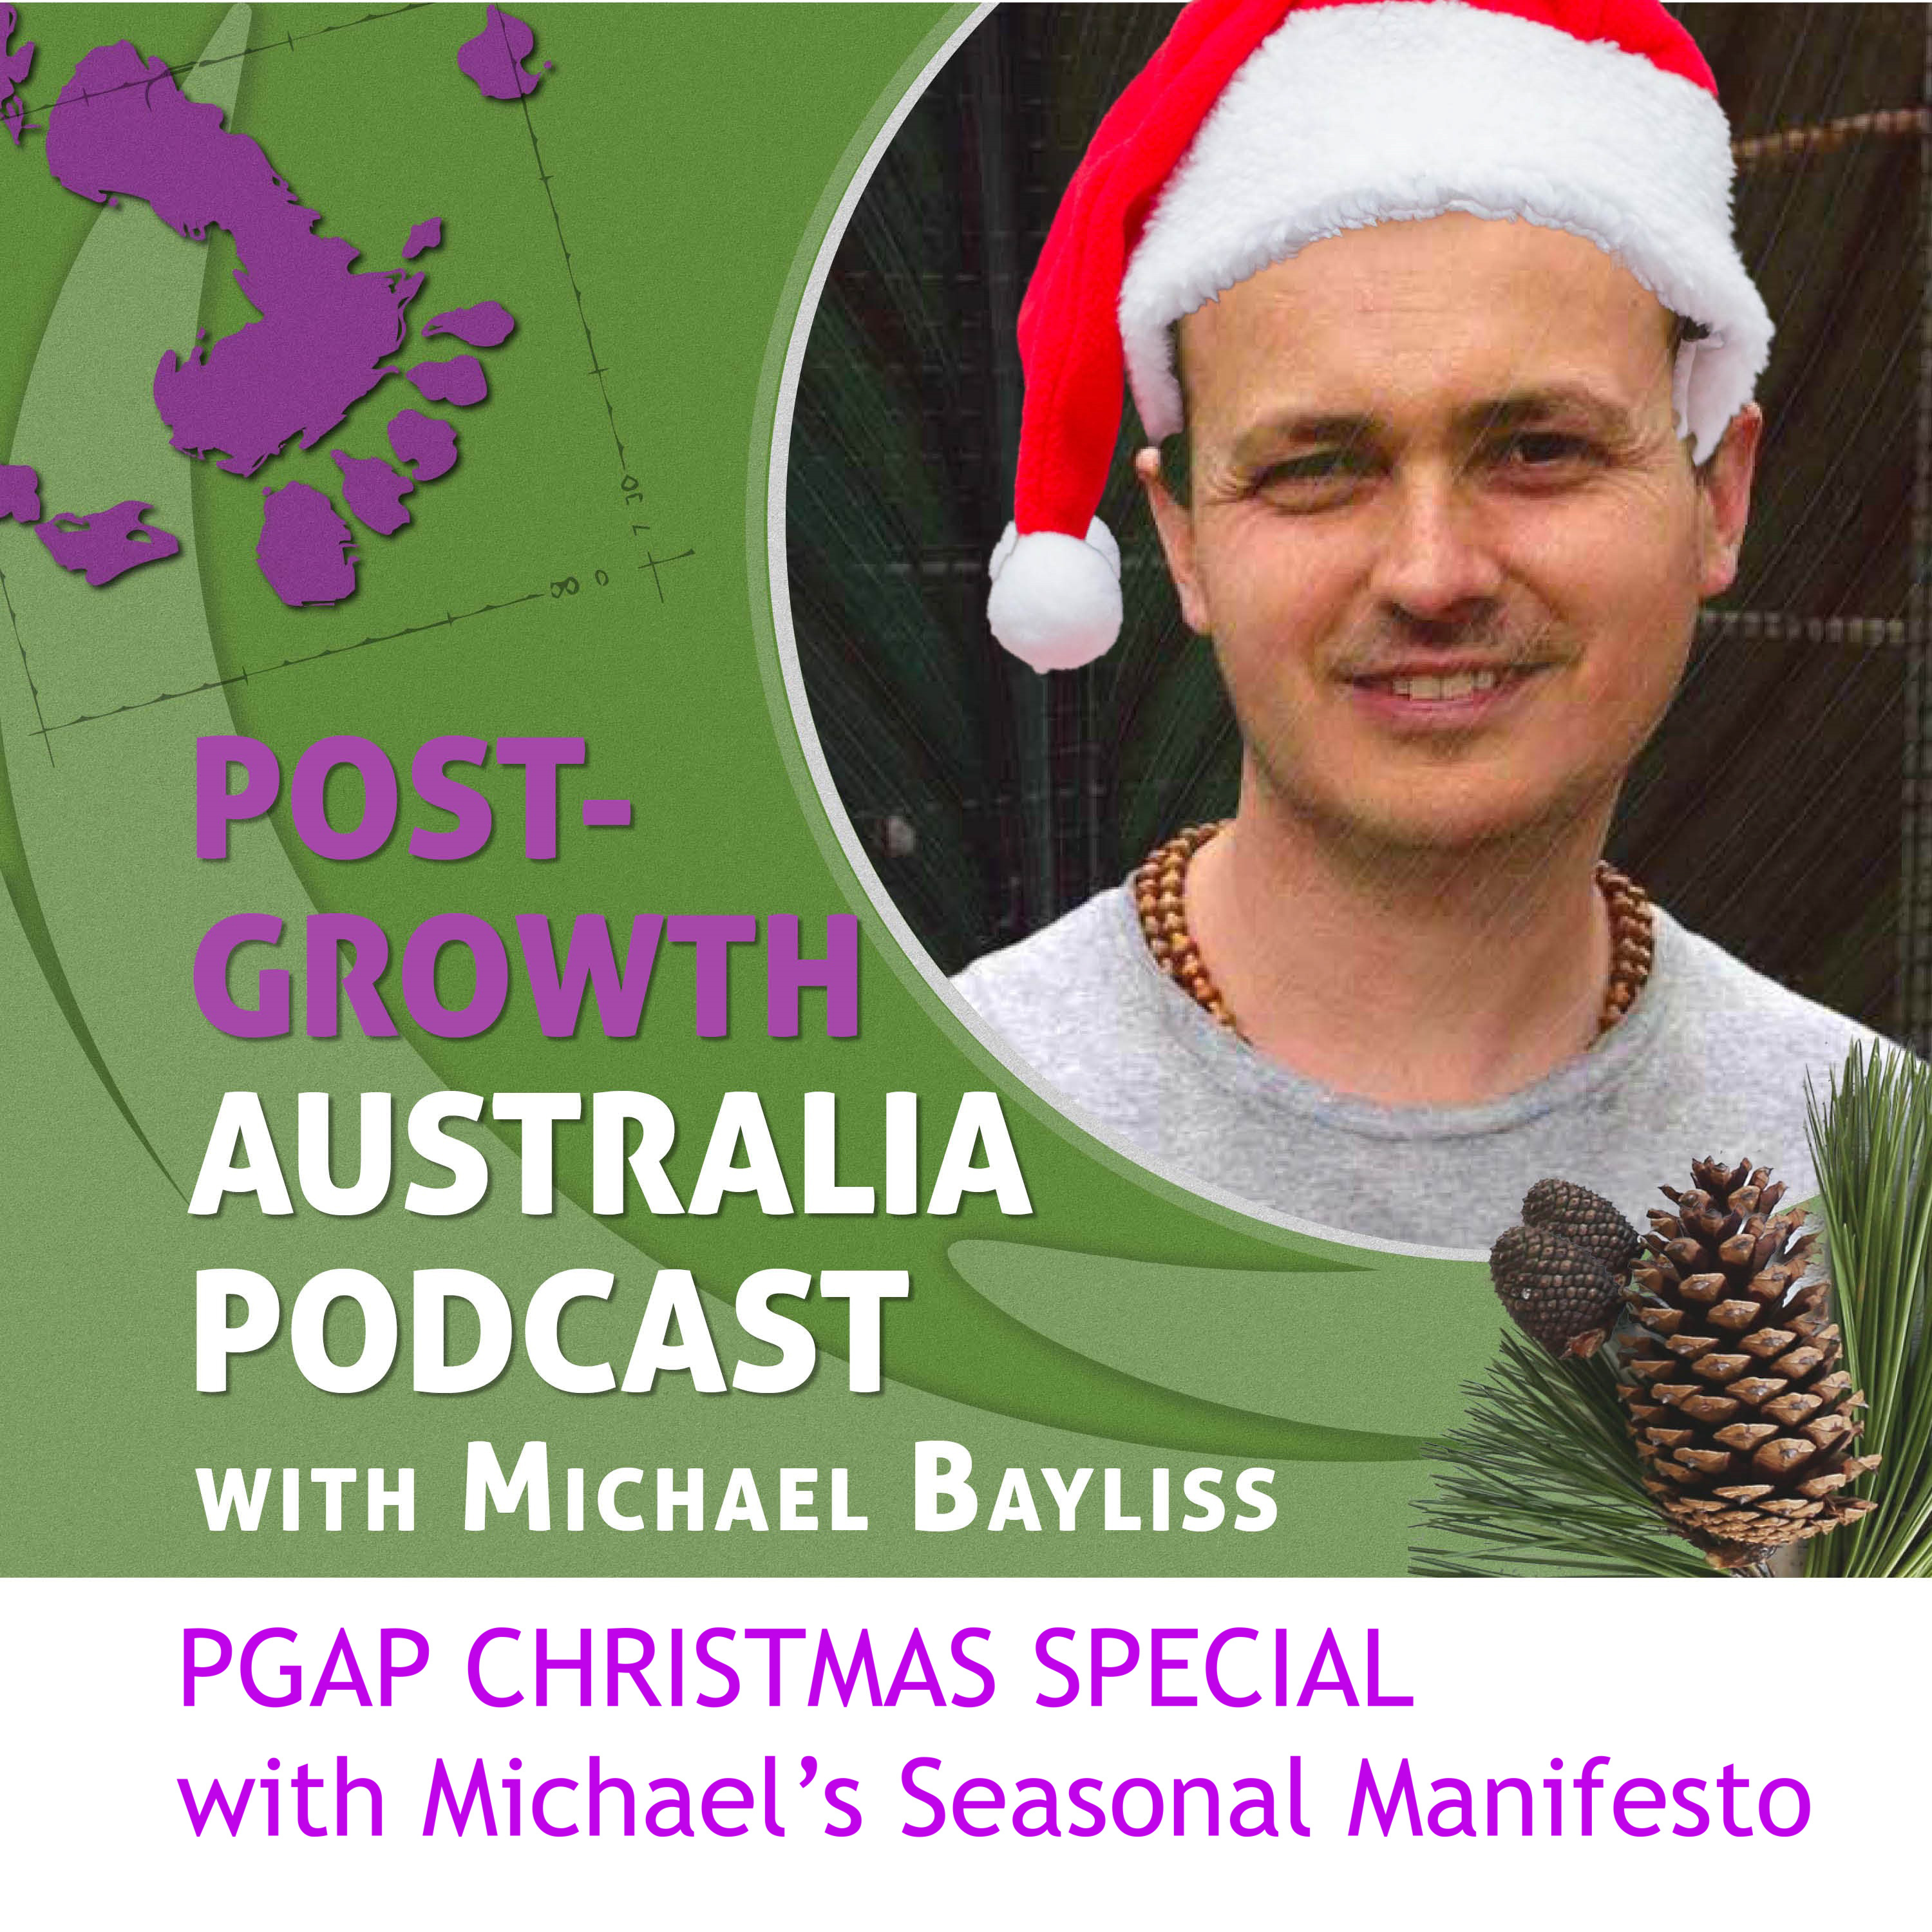 PGAP Christmas Special with Michael's Seasonal Manifesto